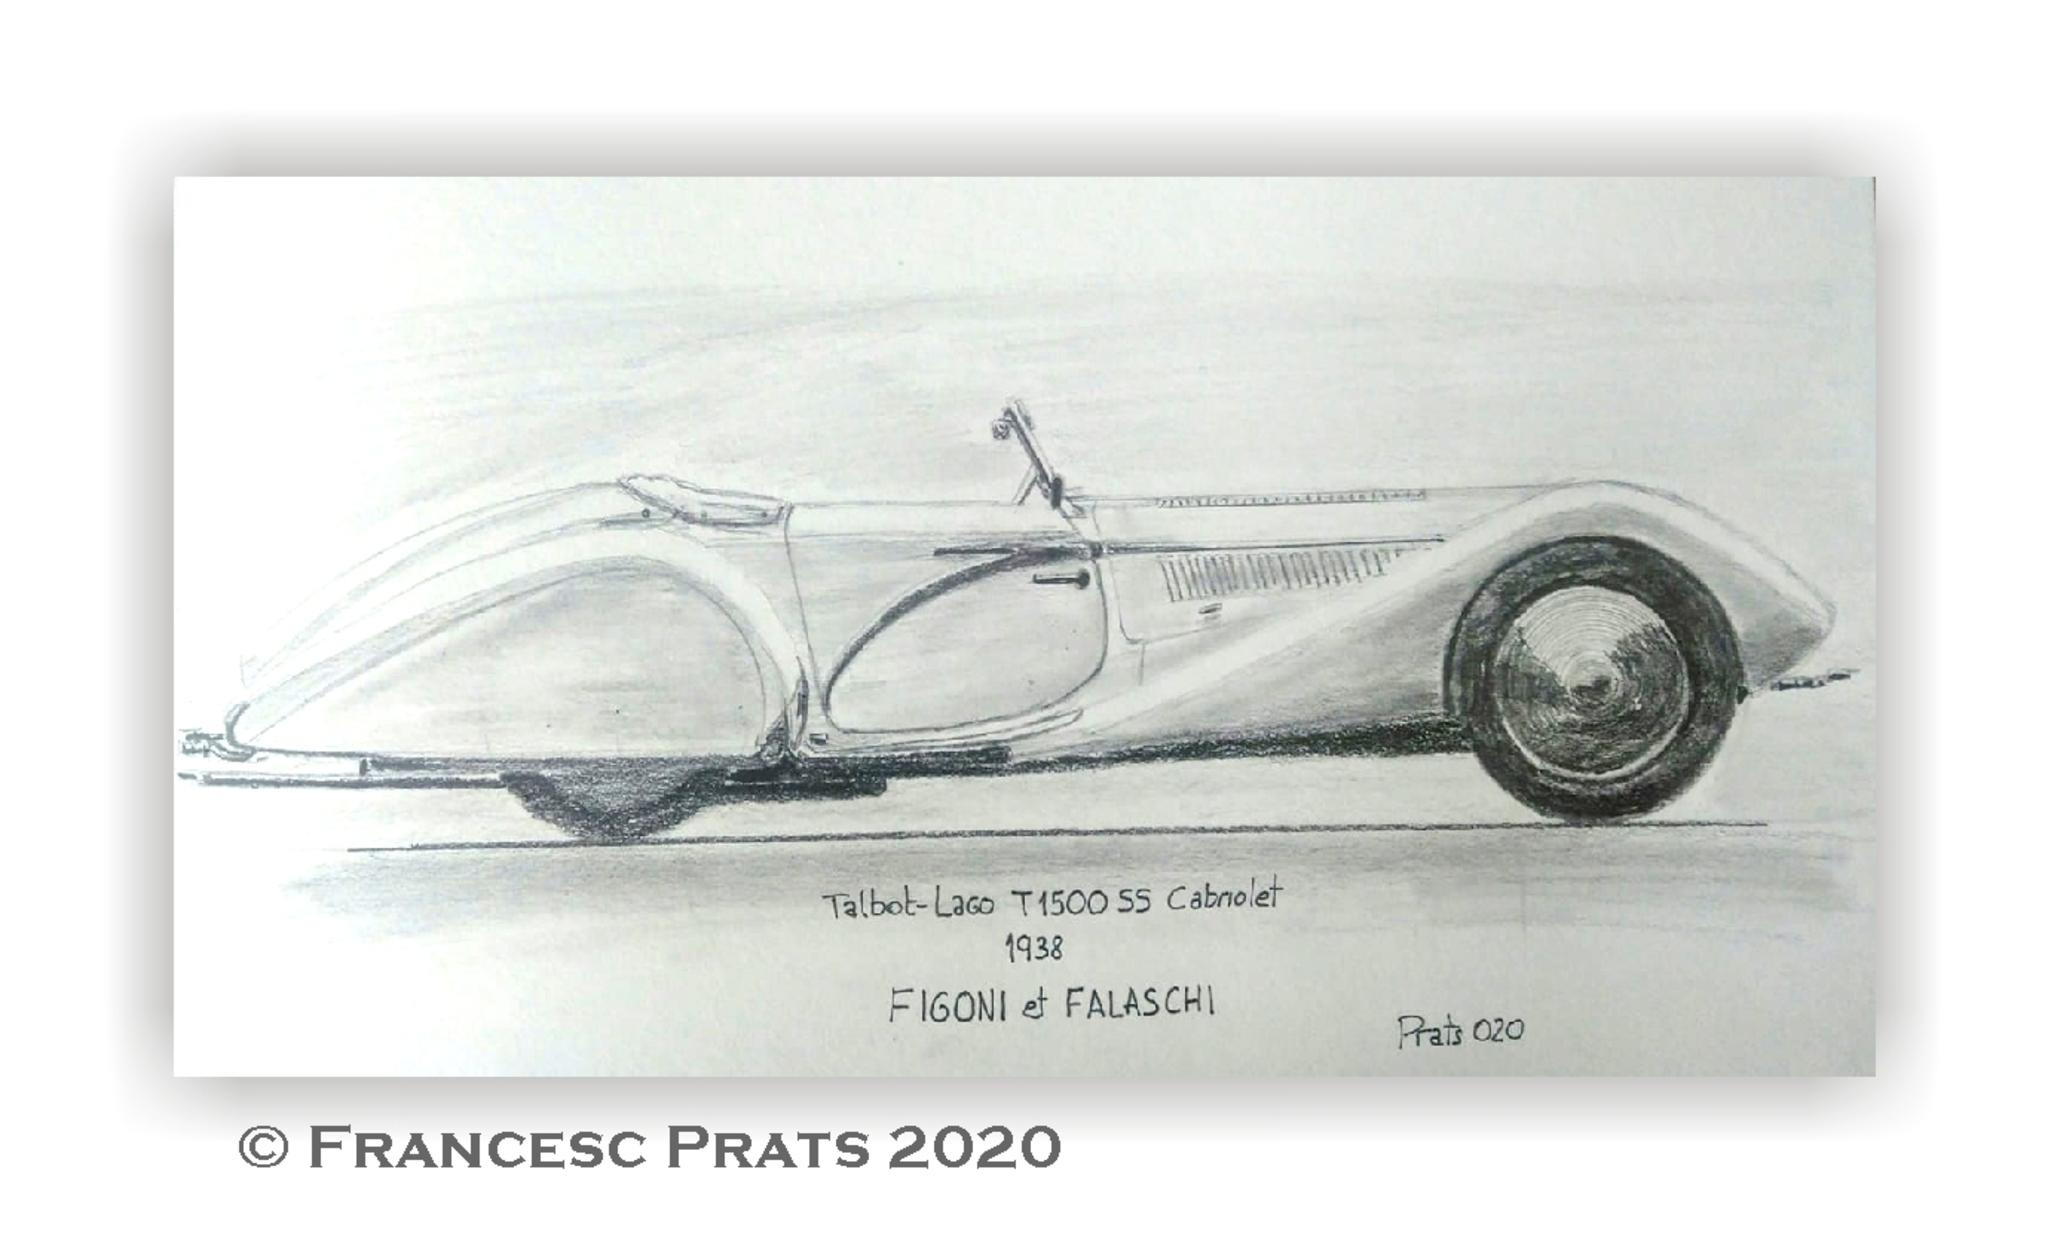  Francesc Prats 2020